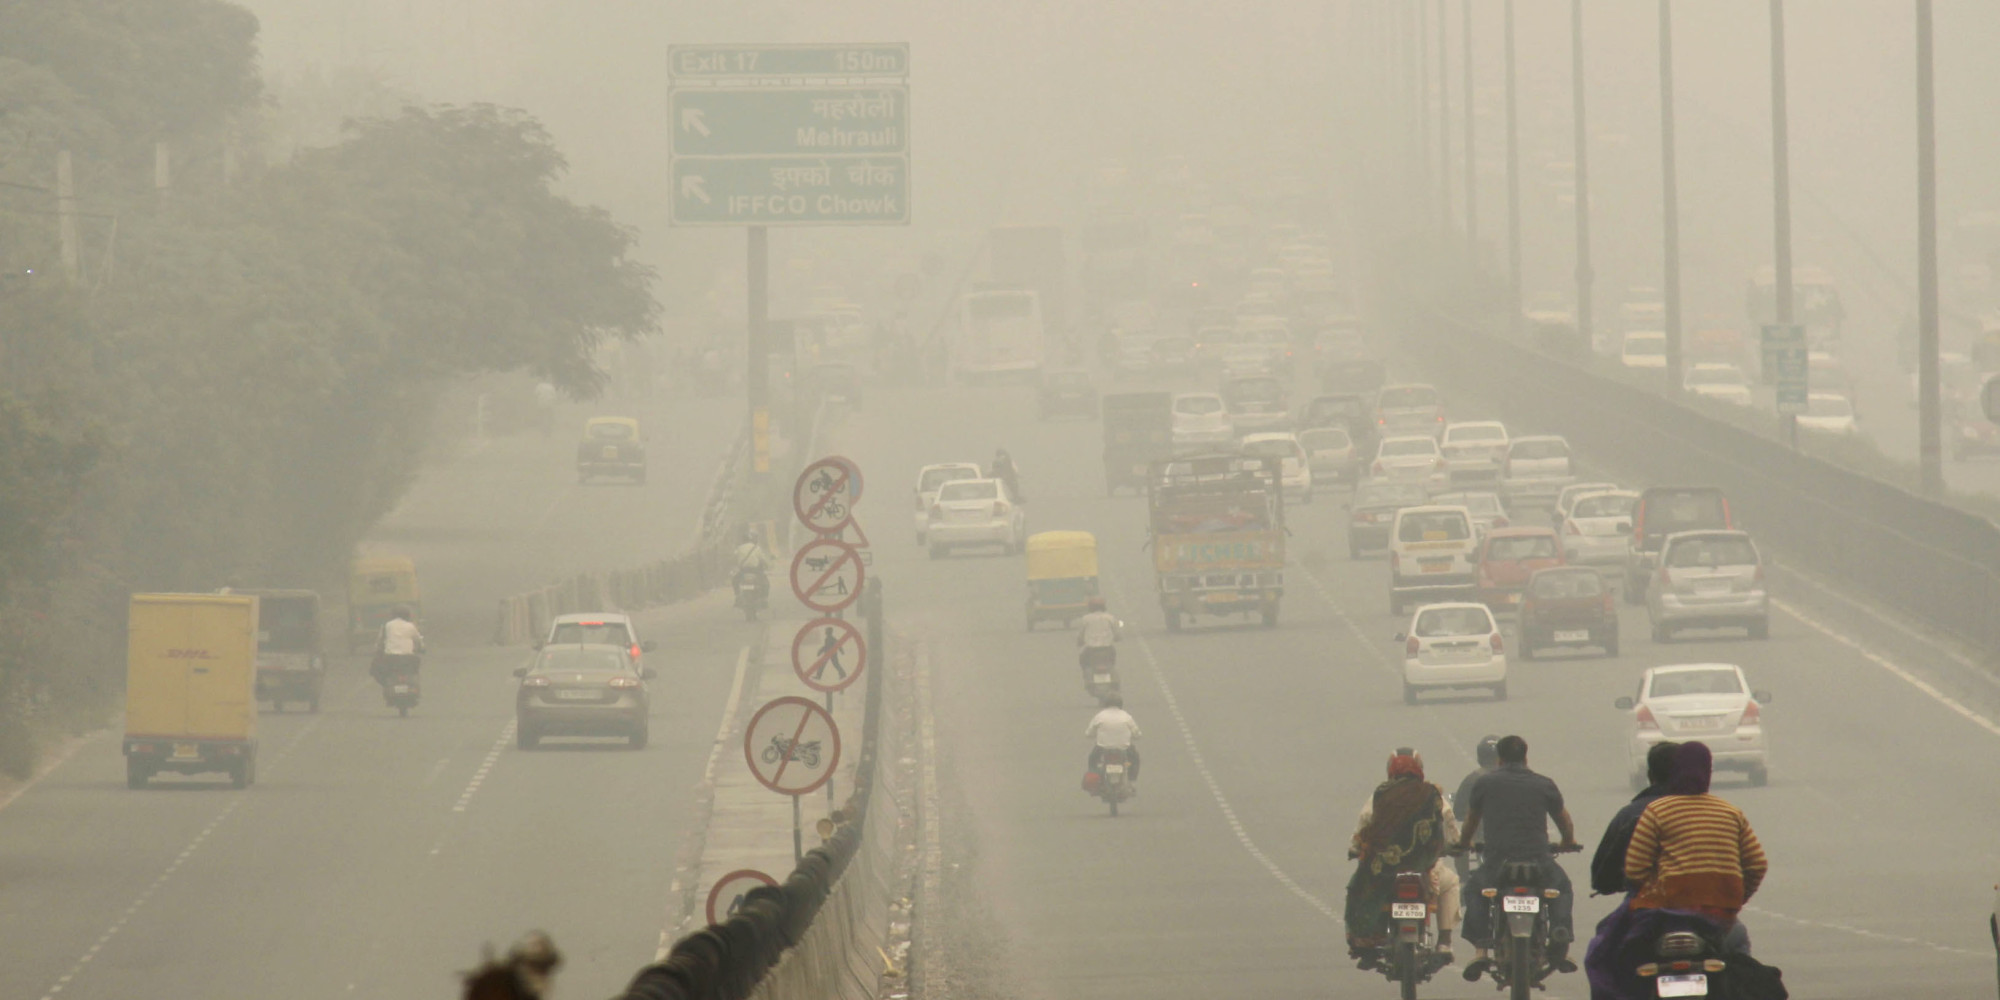 https://www.thebetterindia.com/122036/desperate-measures-government-delhi-smog/